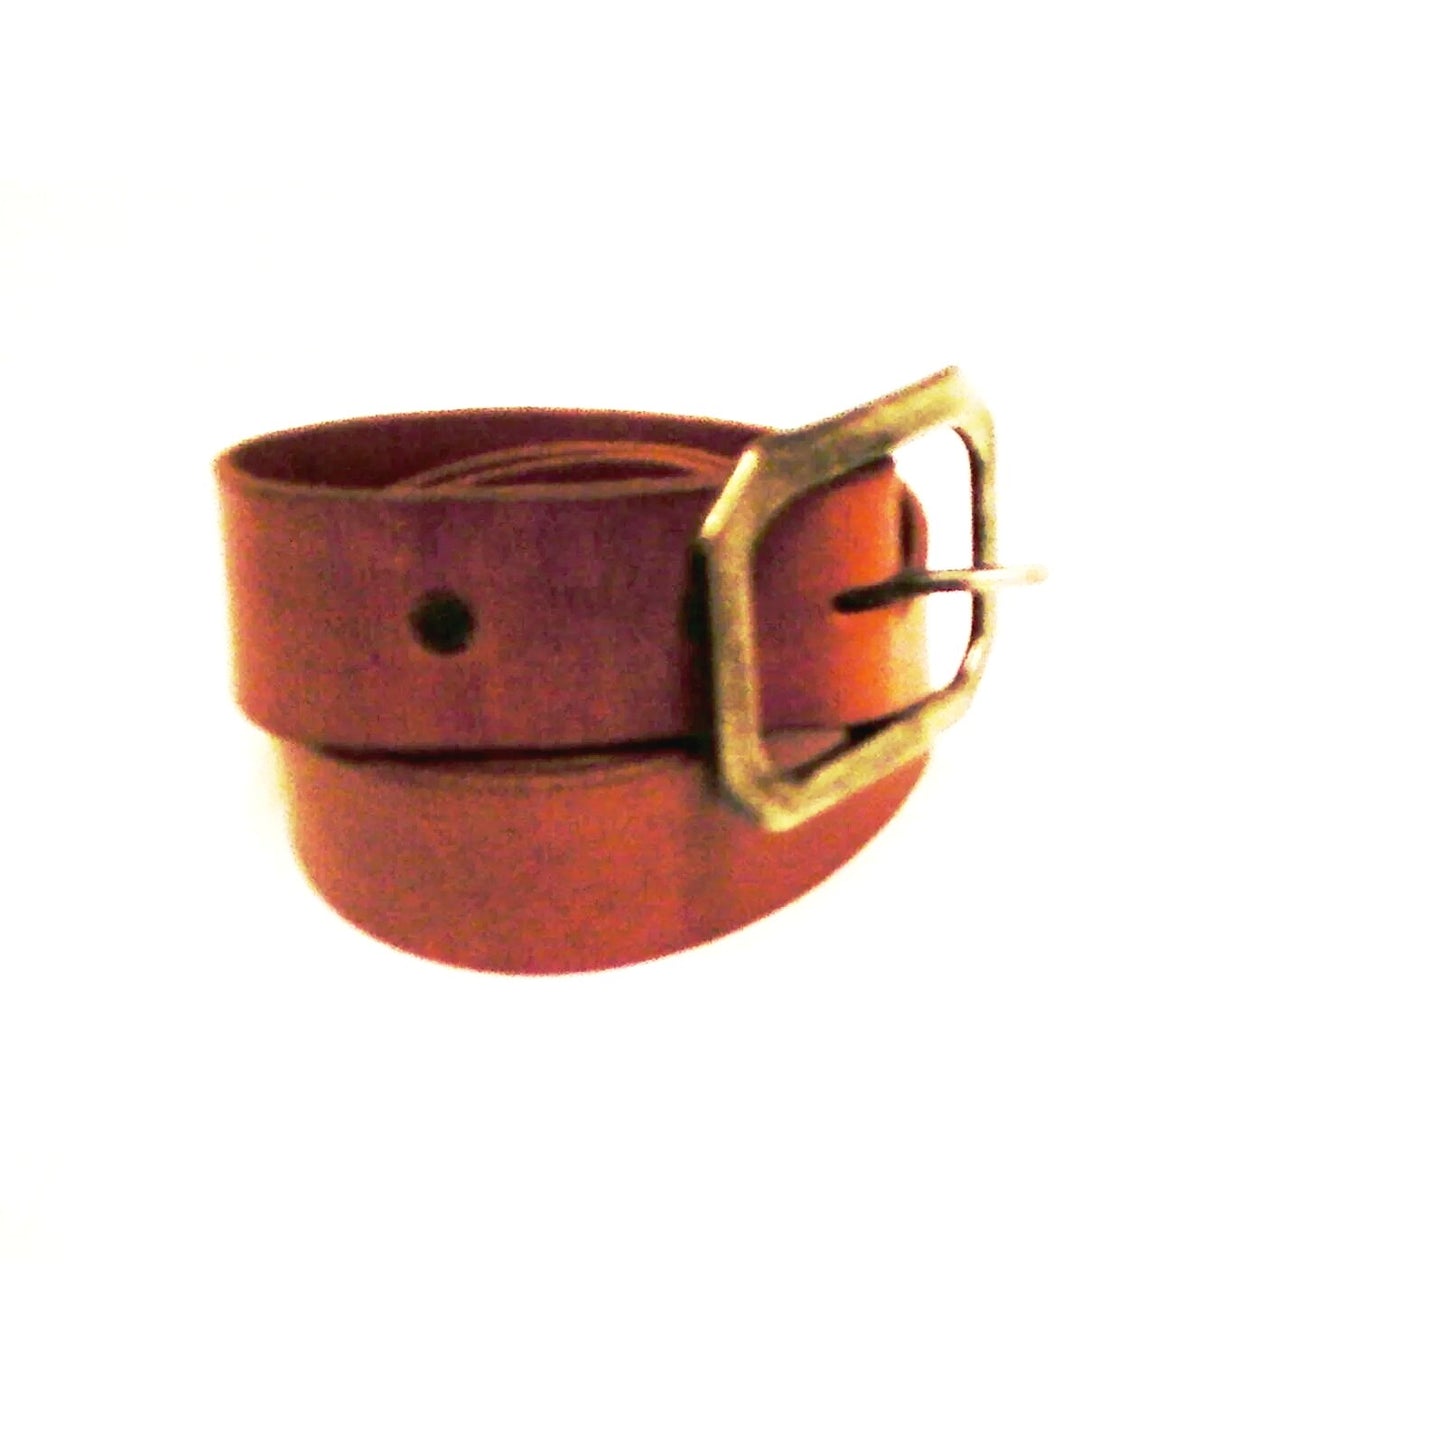 True religion genuine leather belt gunmetal buckle size 30 inch light brown new